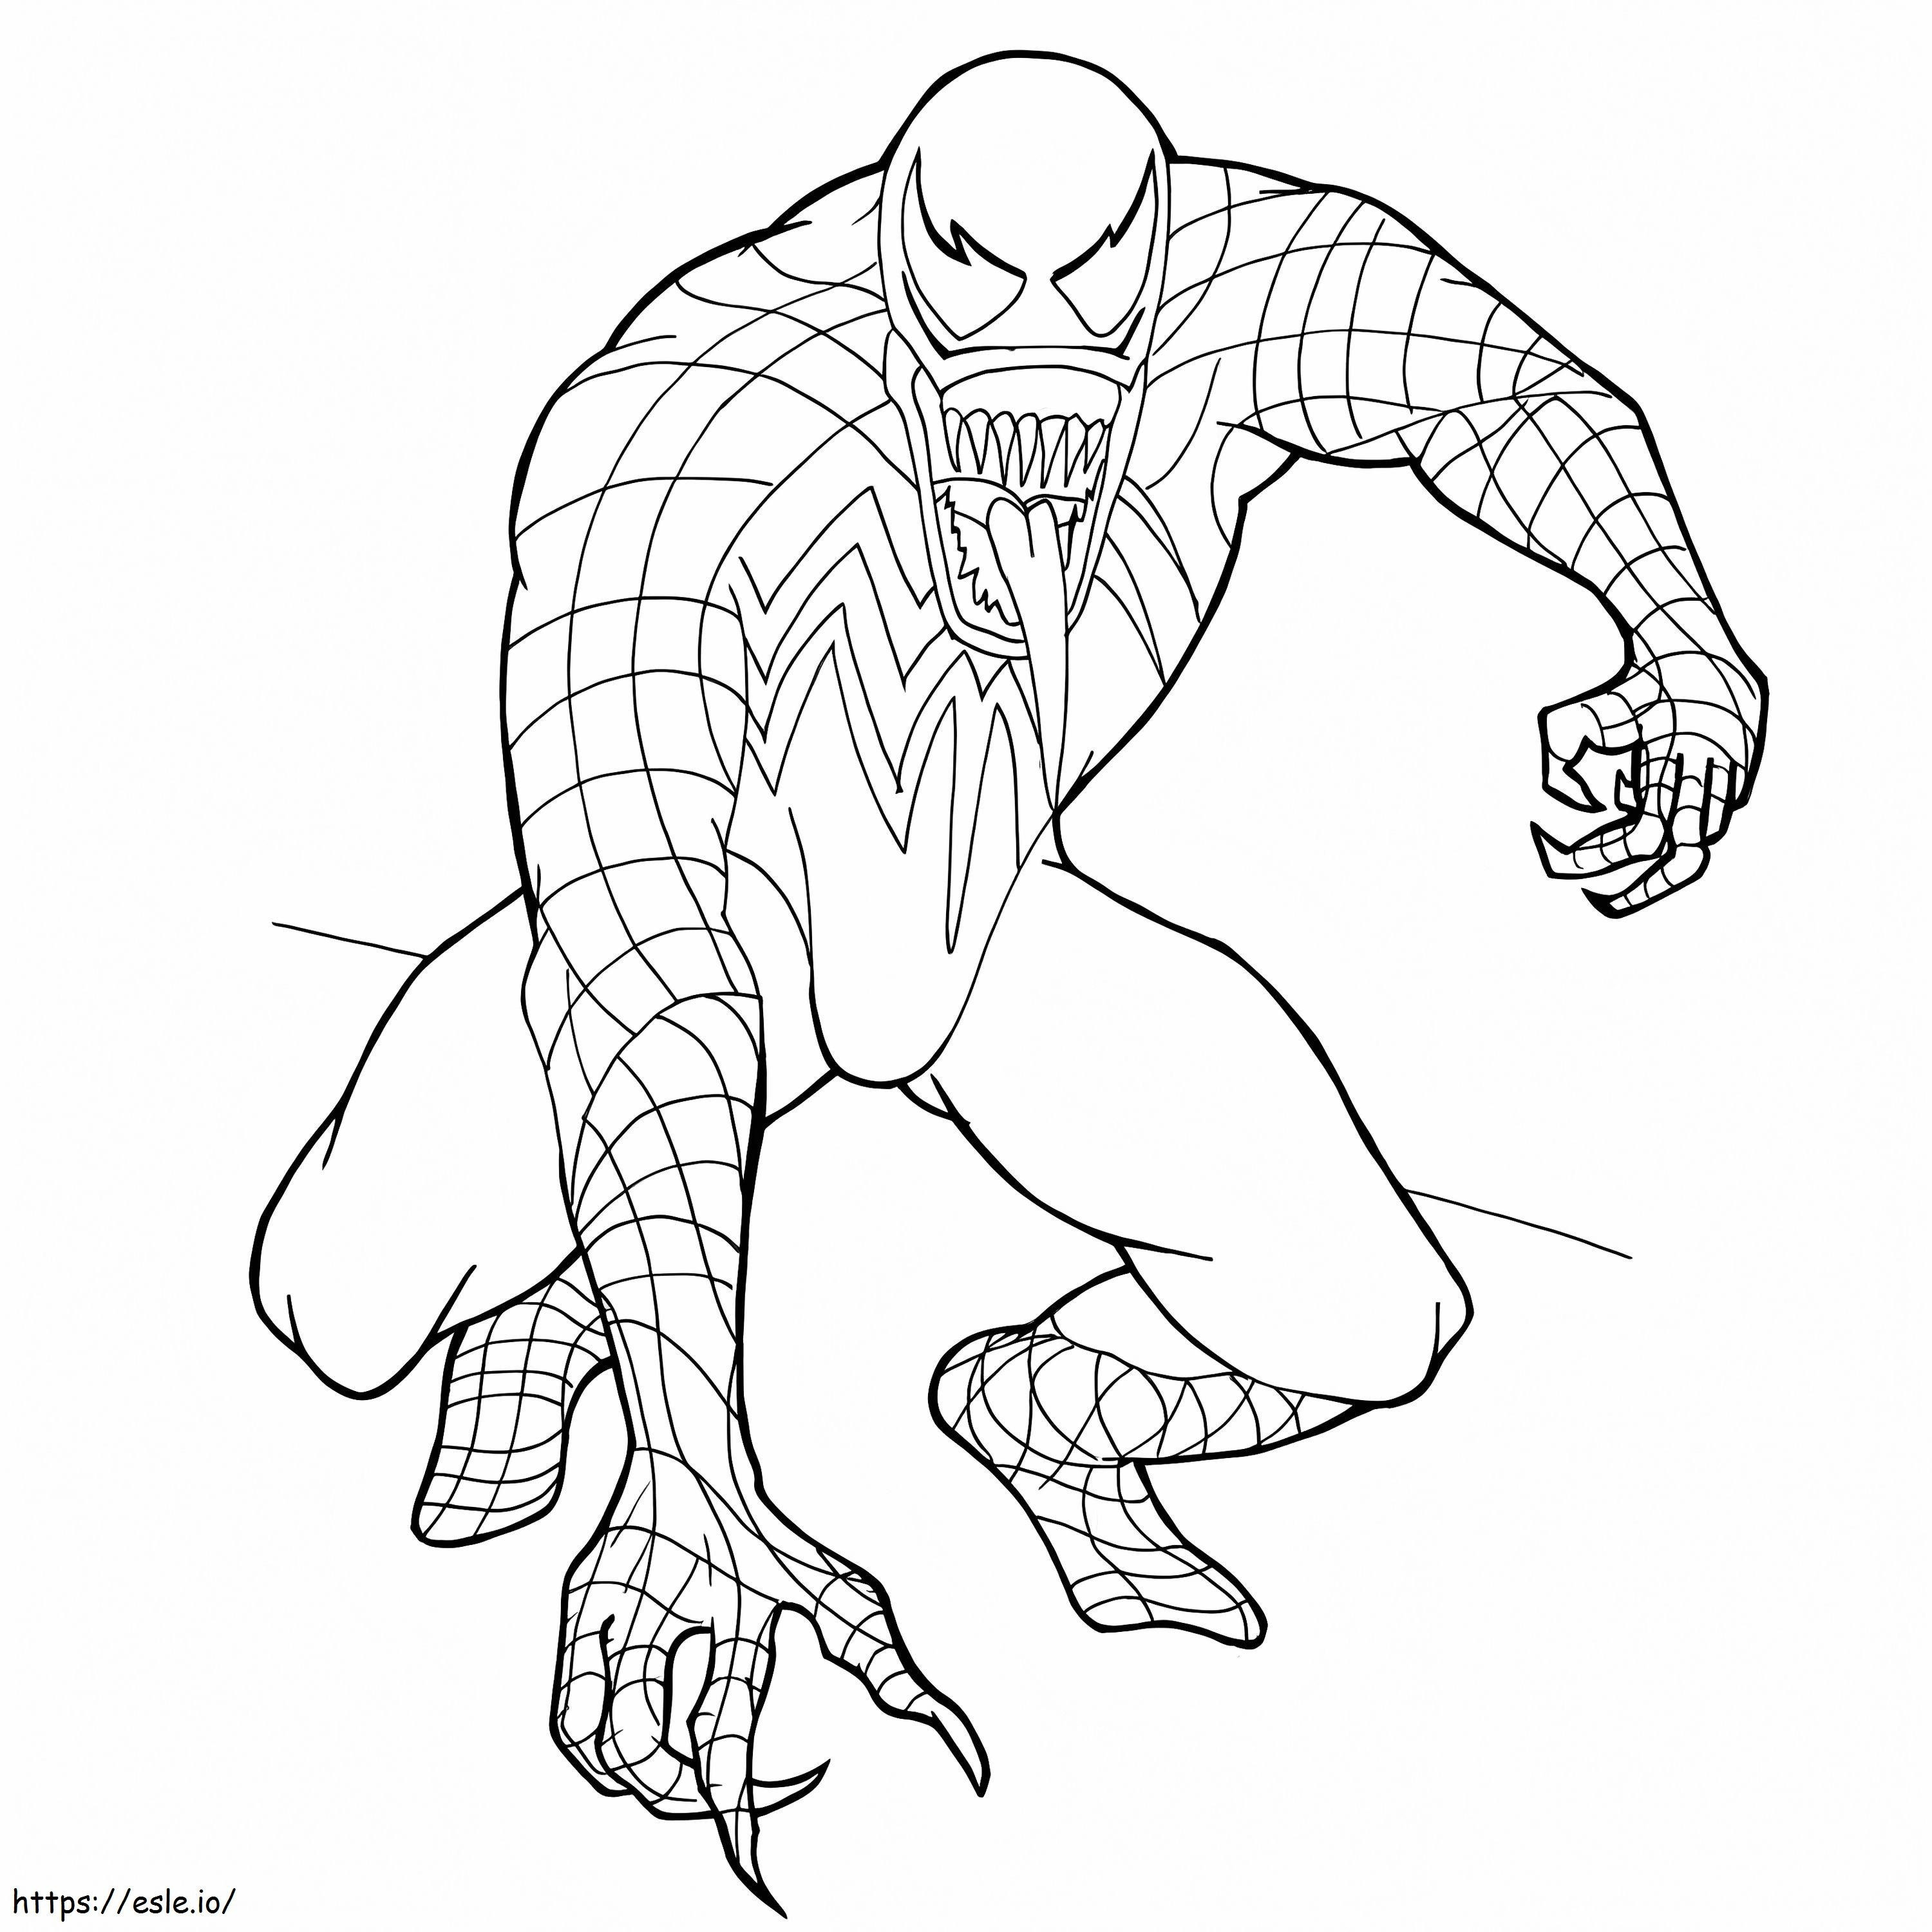 Amazing Venom coloring page